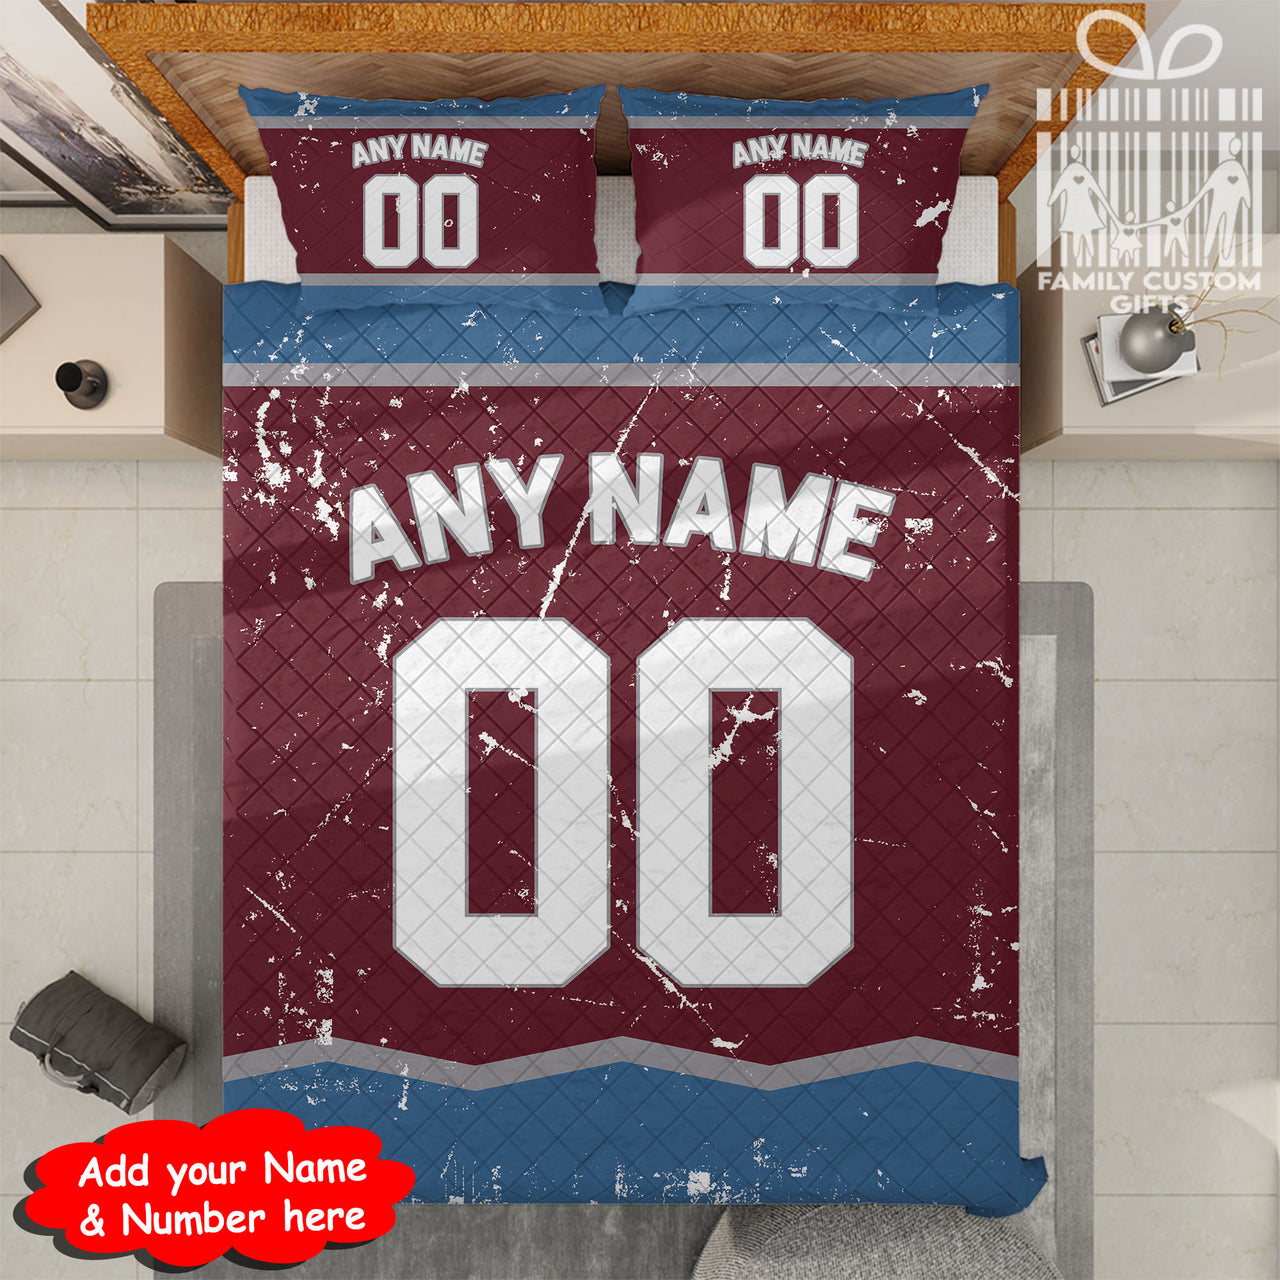 Colorado Avalanche Women Jersey NHL Fan Apparel & Souvenirs for sale